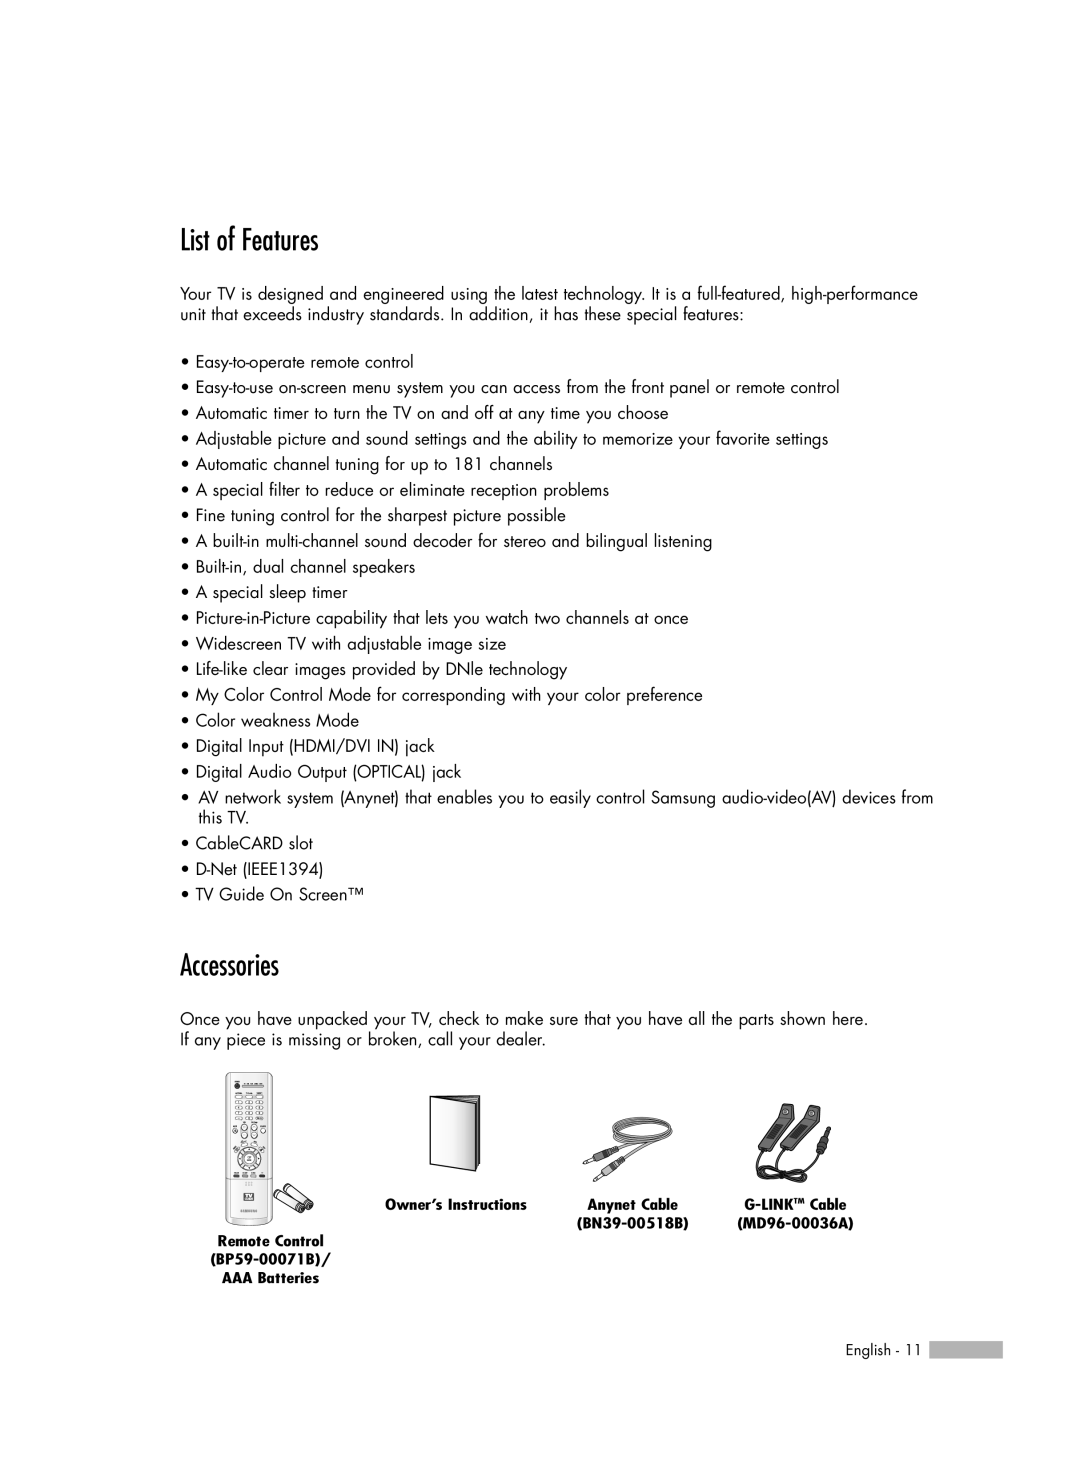 Samsung HL-R7178W, HL-R6178W, HL-R5678W manual List of Features, Accessories 